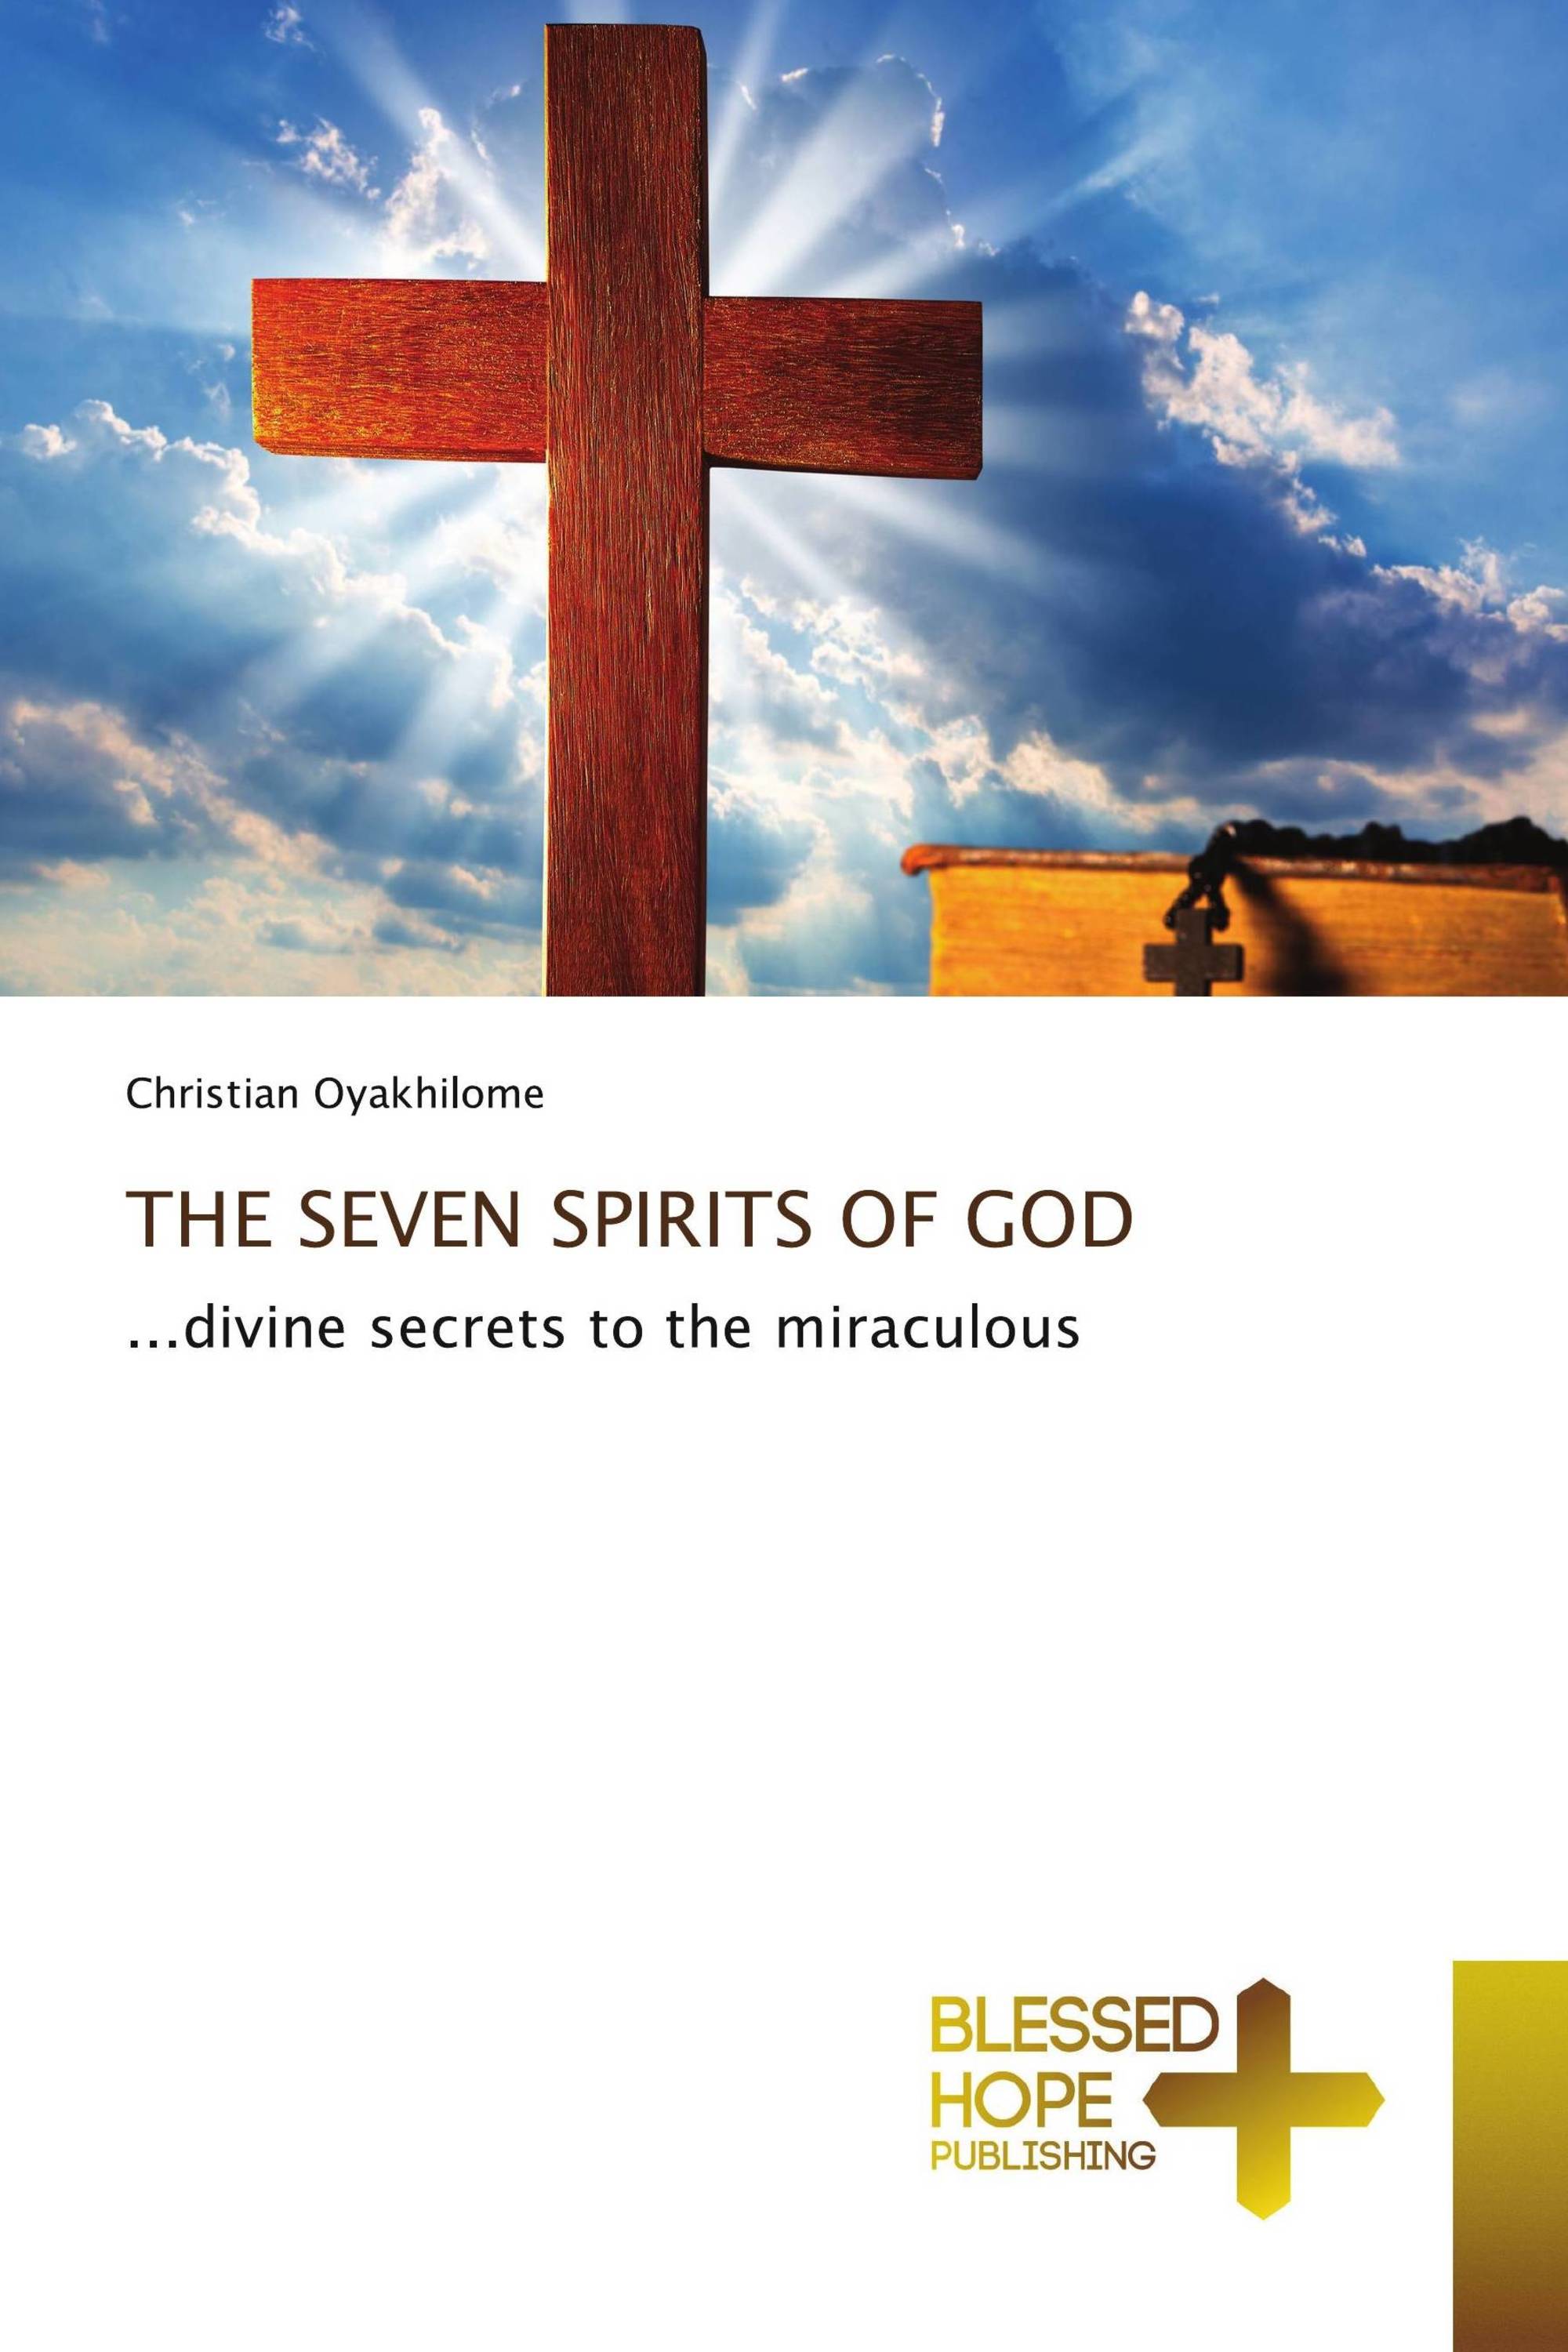 THE SEVEN SPIRITS OF GOD